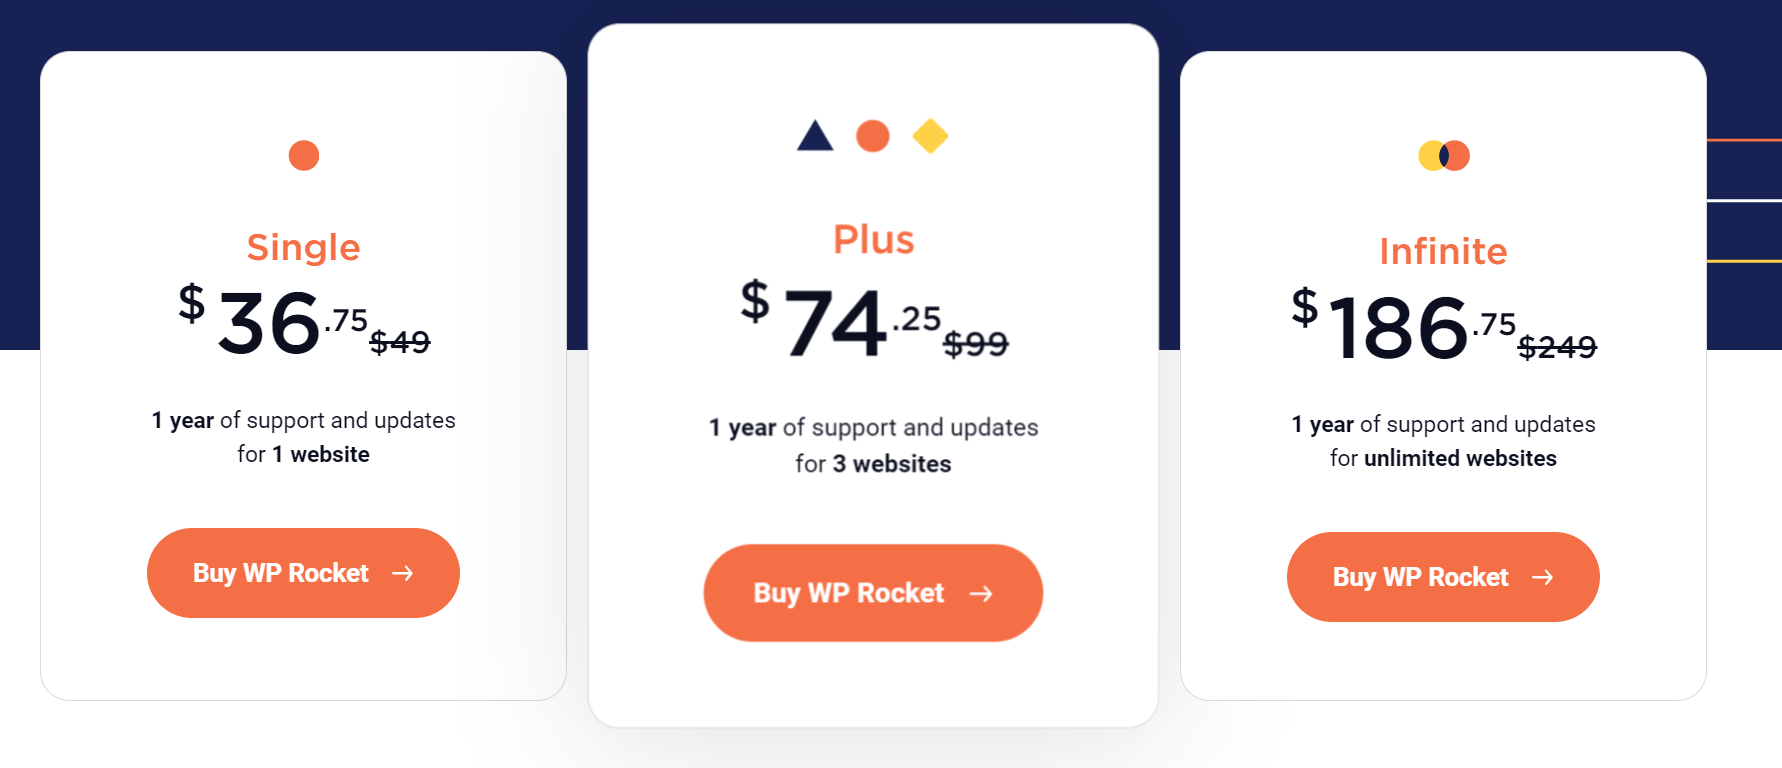 wp rocket pricing